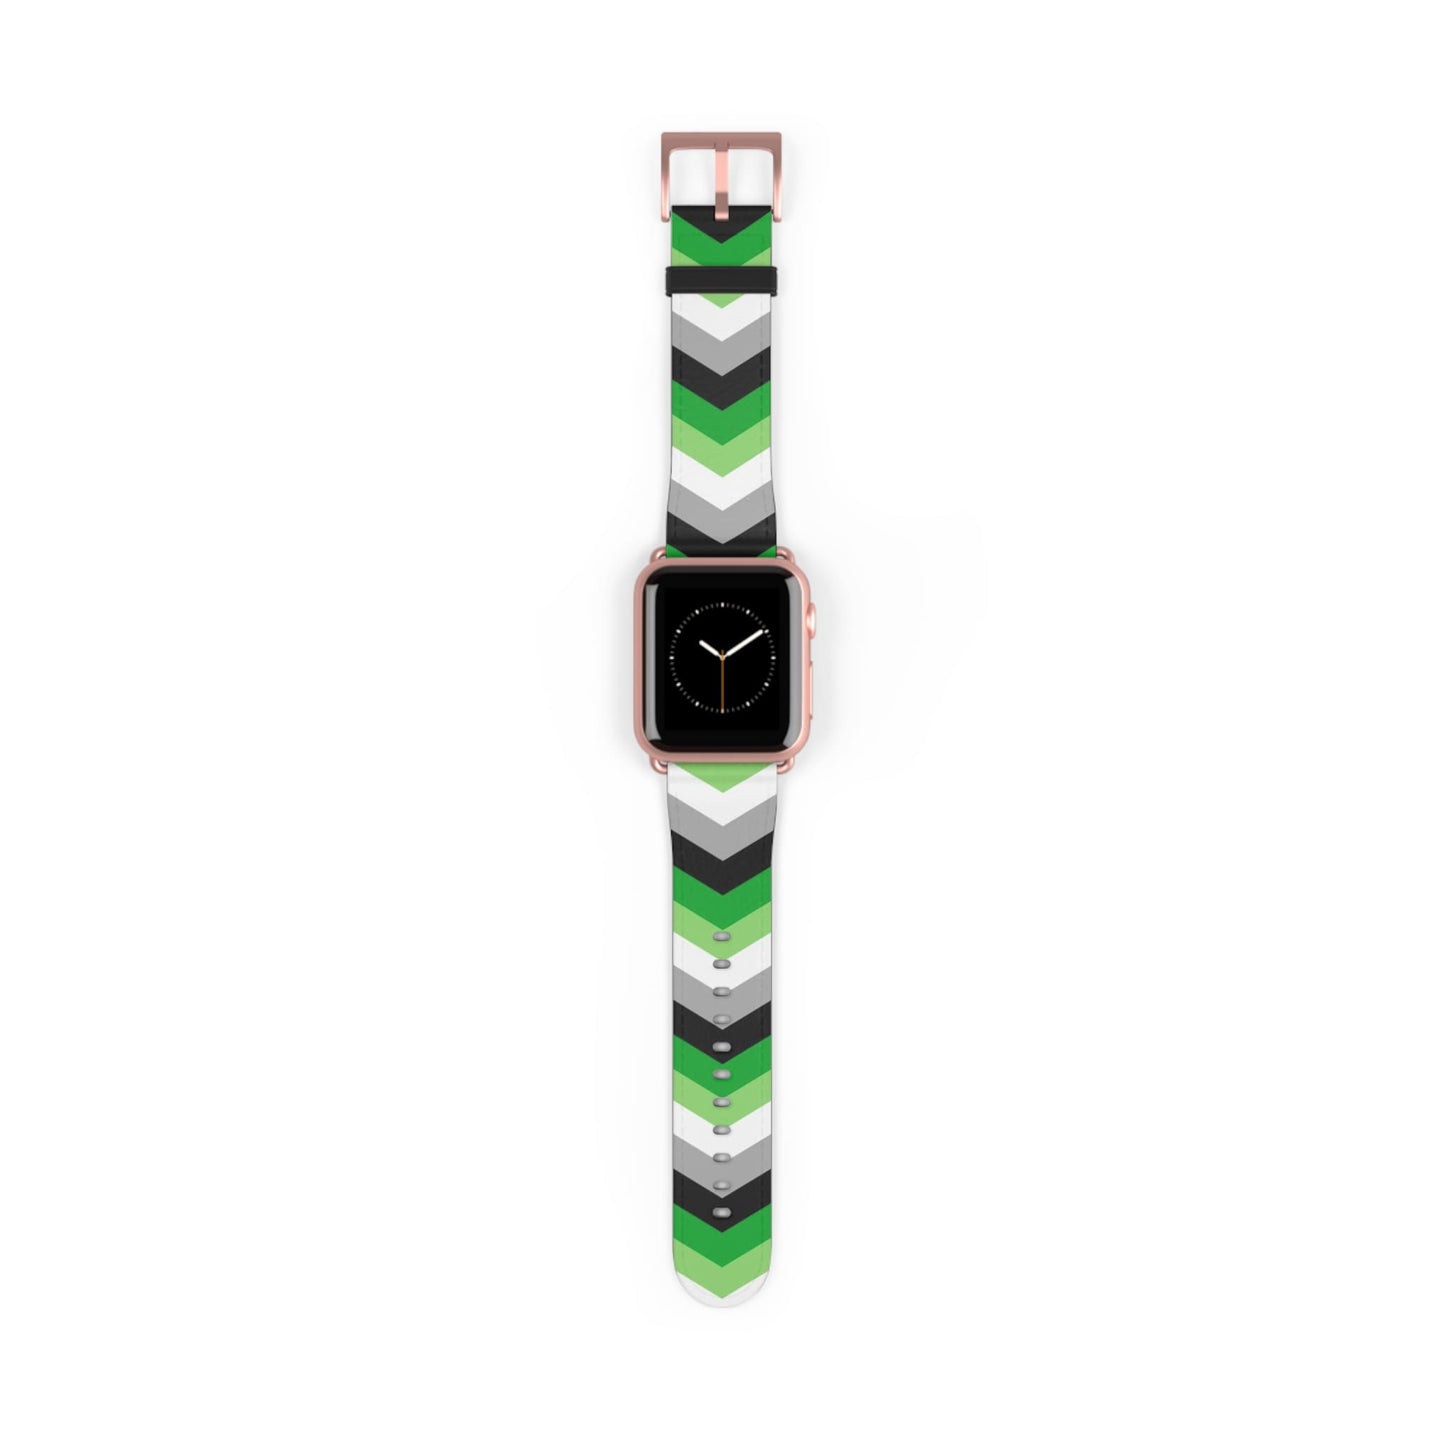 aromantic apple watch band, discreet chevron pattern, rose gold